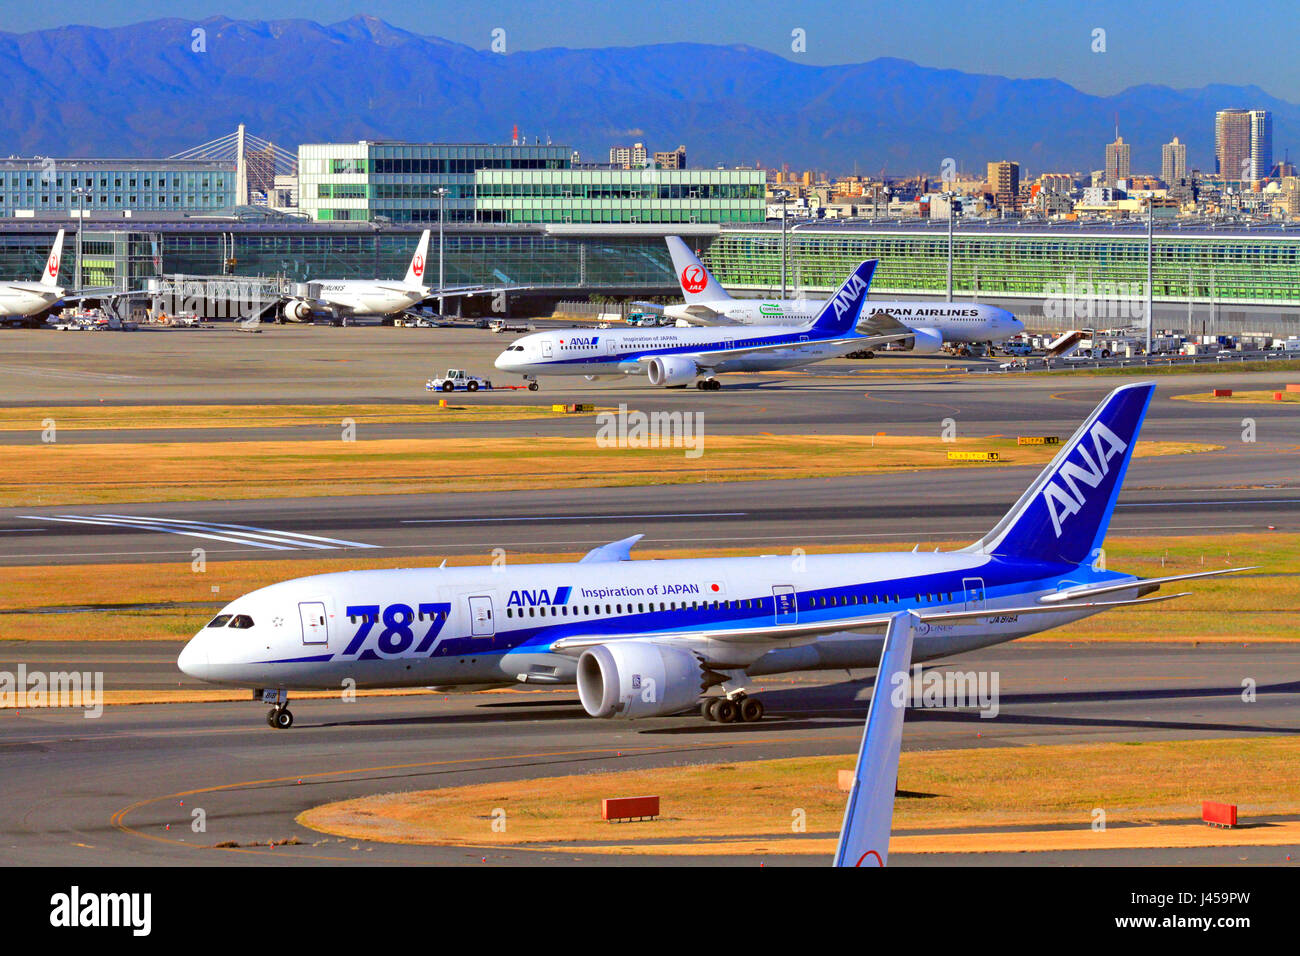 ANA Boeing 787 taxiing at Haneda Airport Tokyo Japan Stock Photo